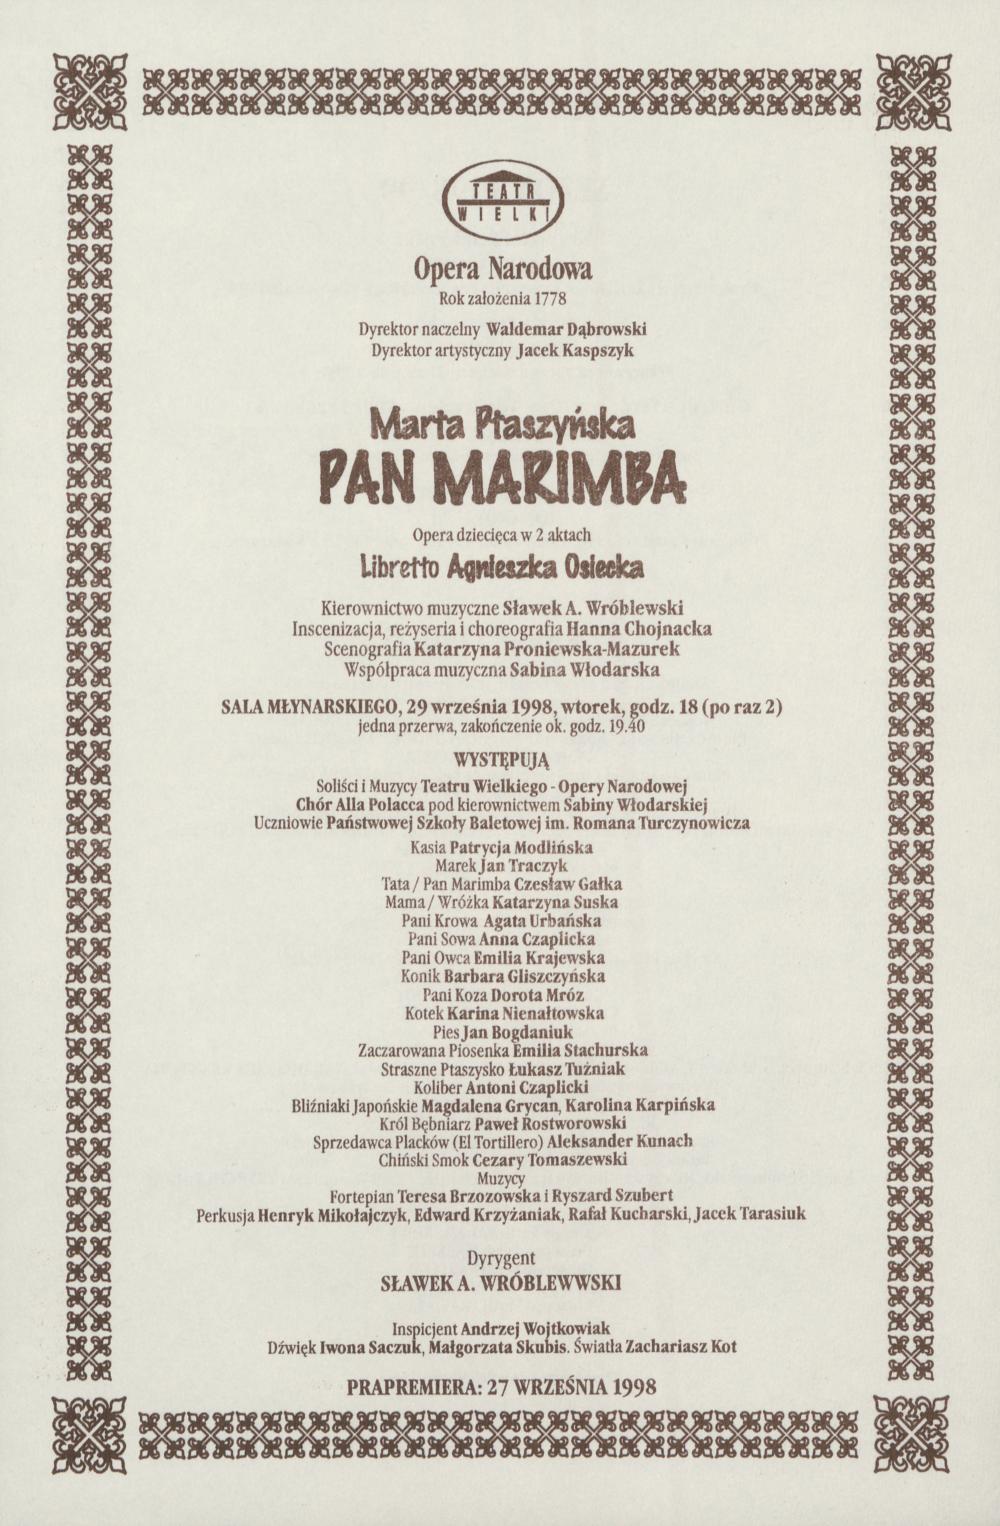 Wkładka Obsadowa „Pan Marimba” Marta Ptaszyńska 29-09-1998